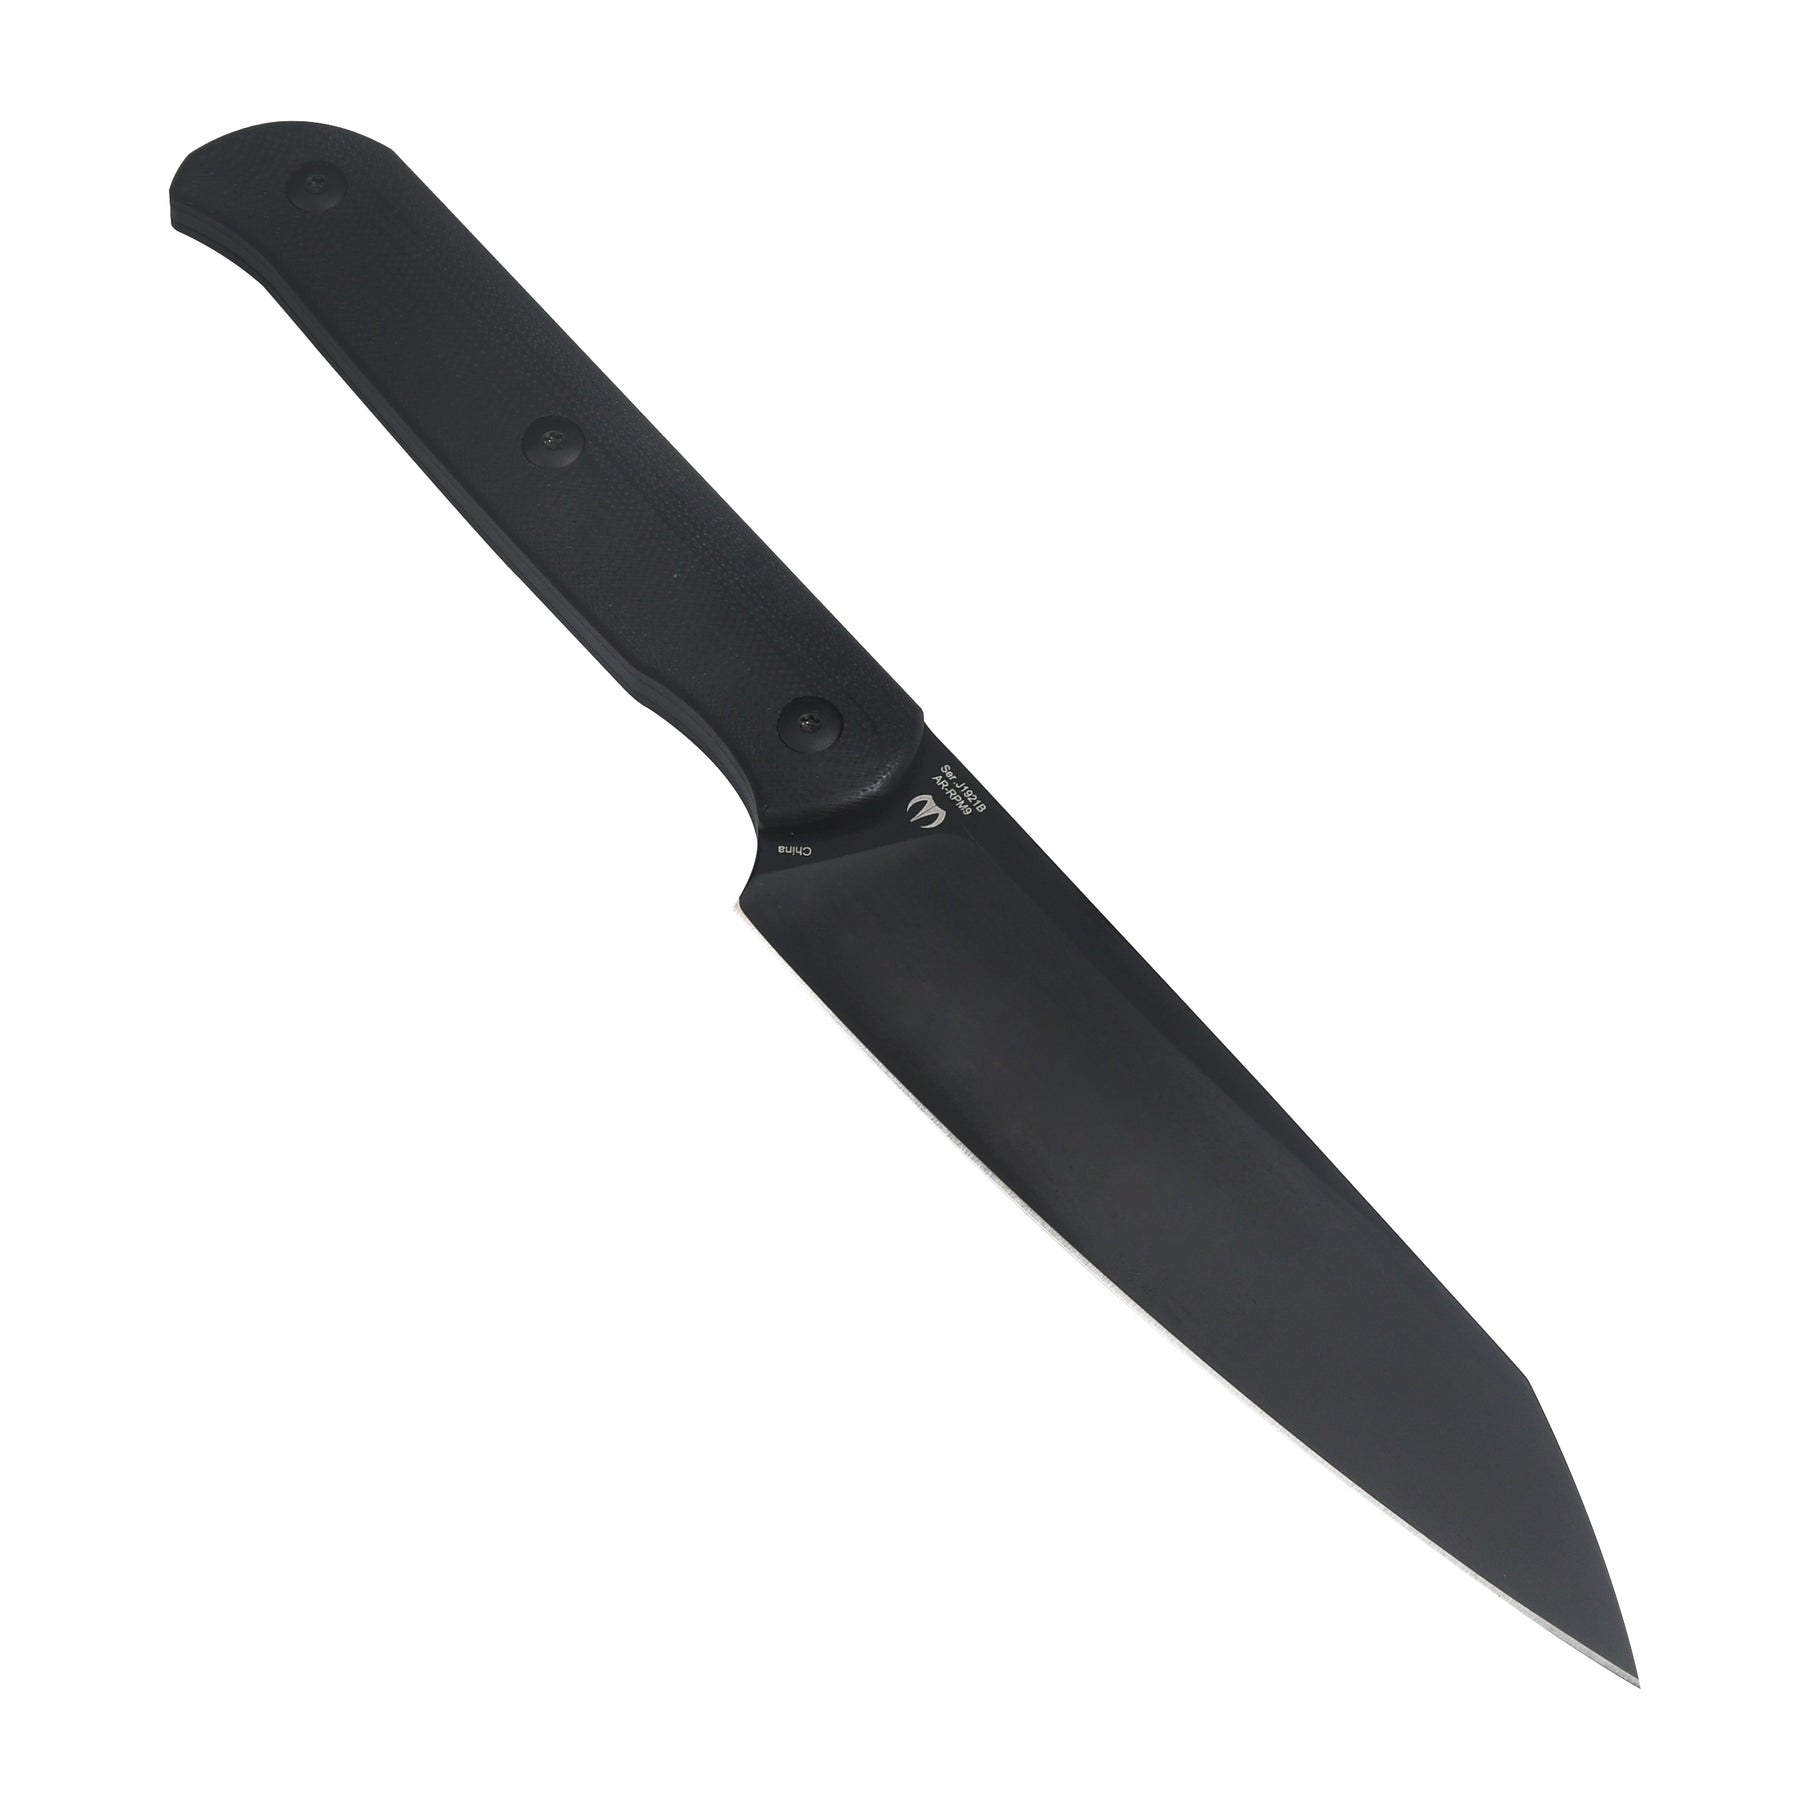 CJRB SILAX J1921B AR-RPM9 BLACK PVaD COATED BLADE G10 HANDLE FIXED BLADE KNIVES